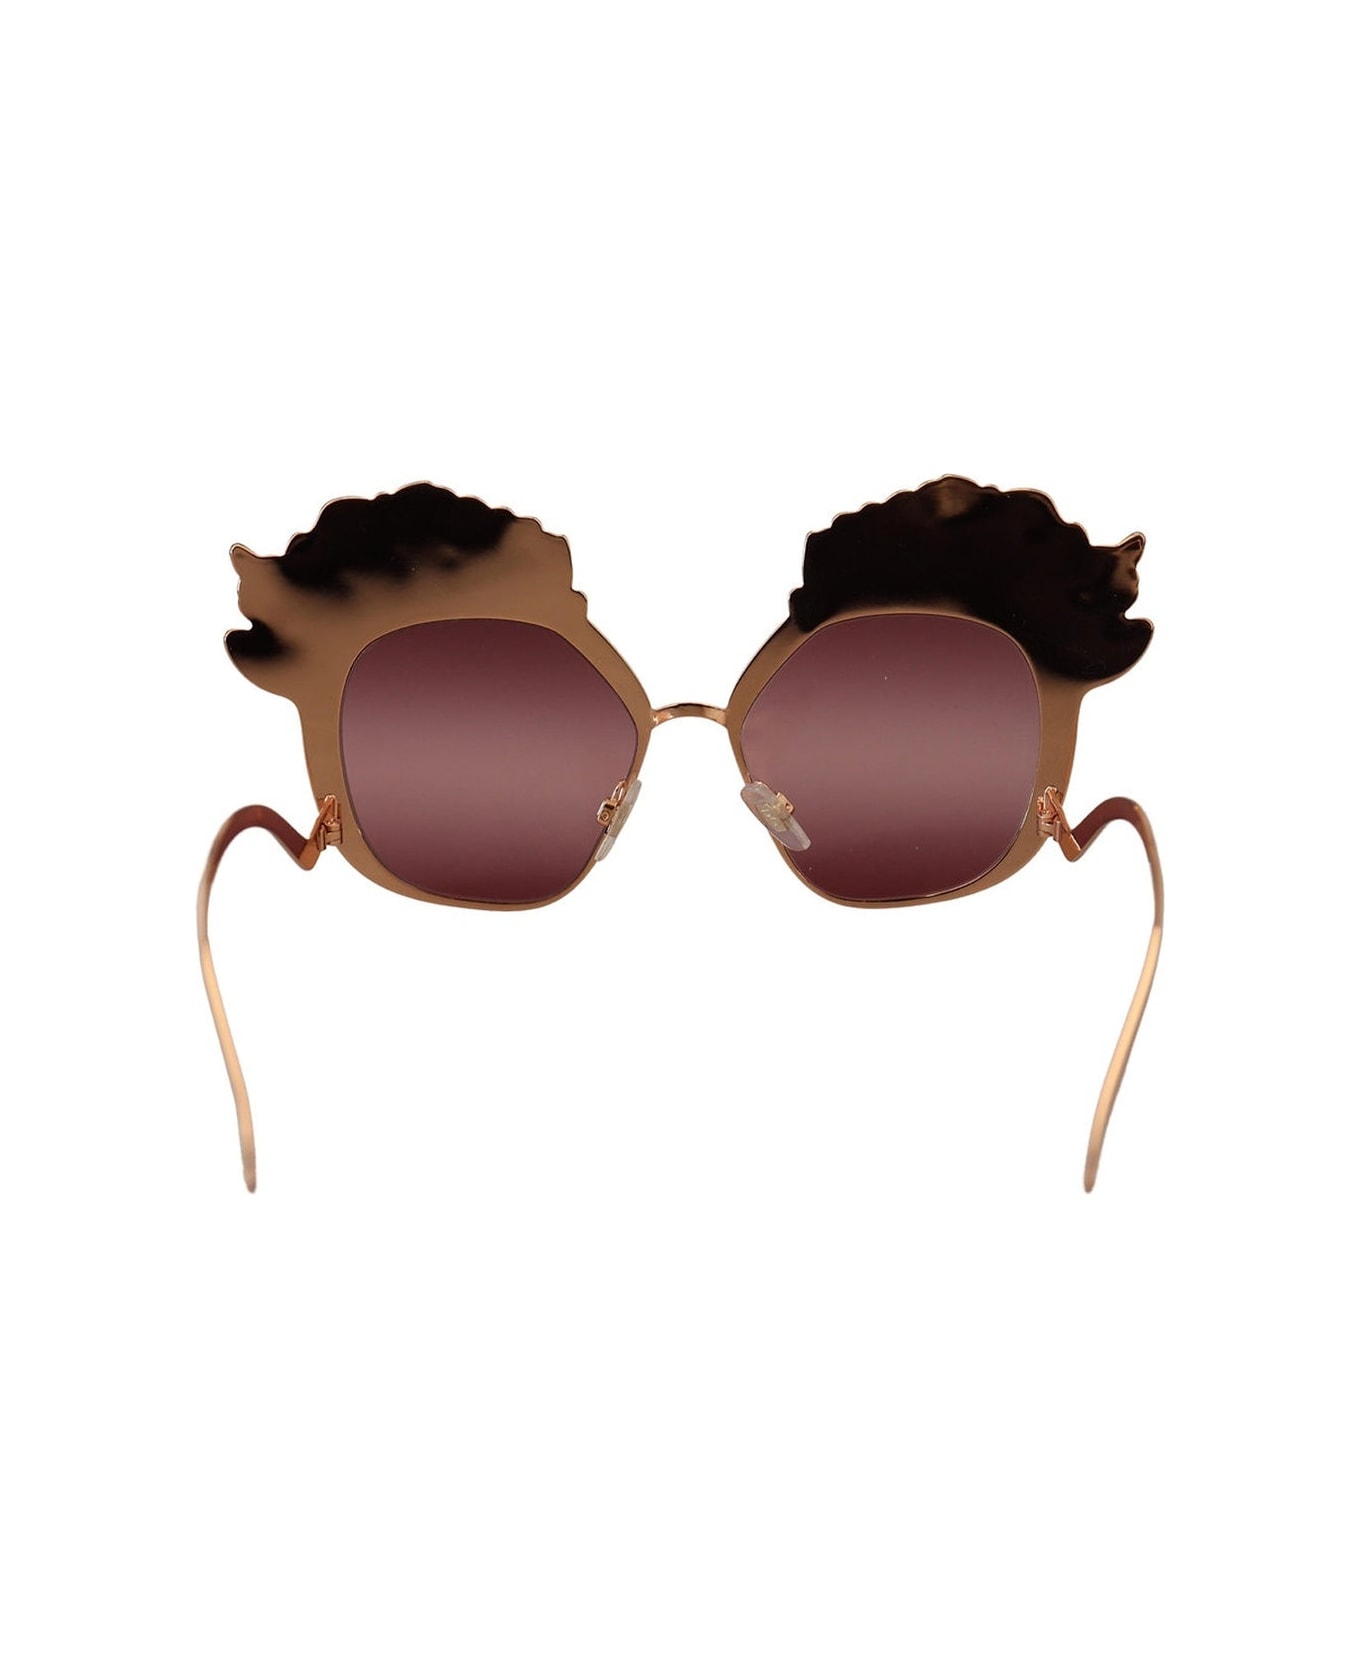 Dolce & Gabbana Rose Sequin Sunglasses - Gold